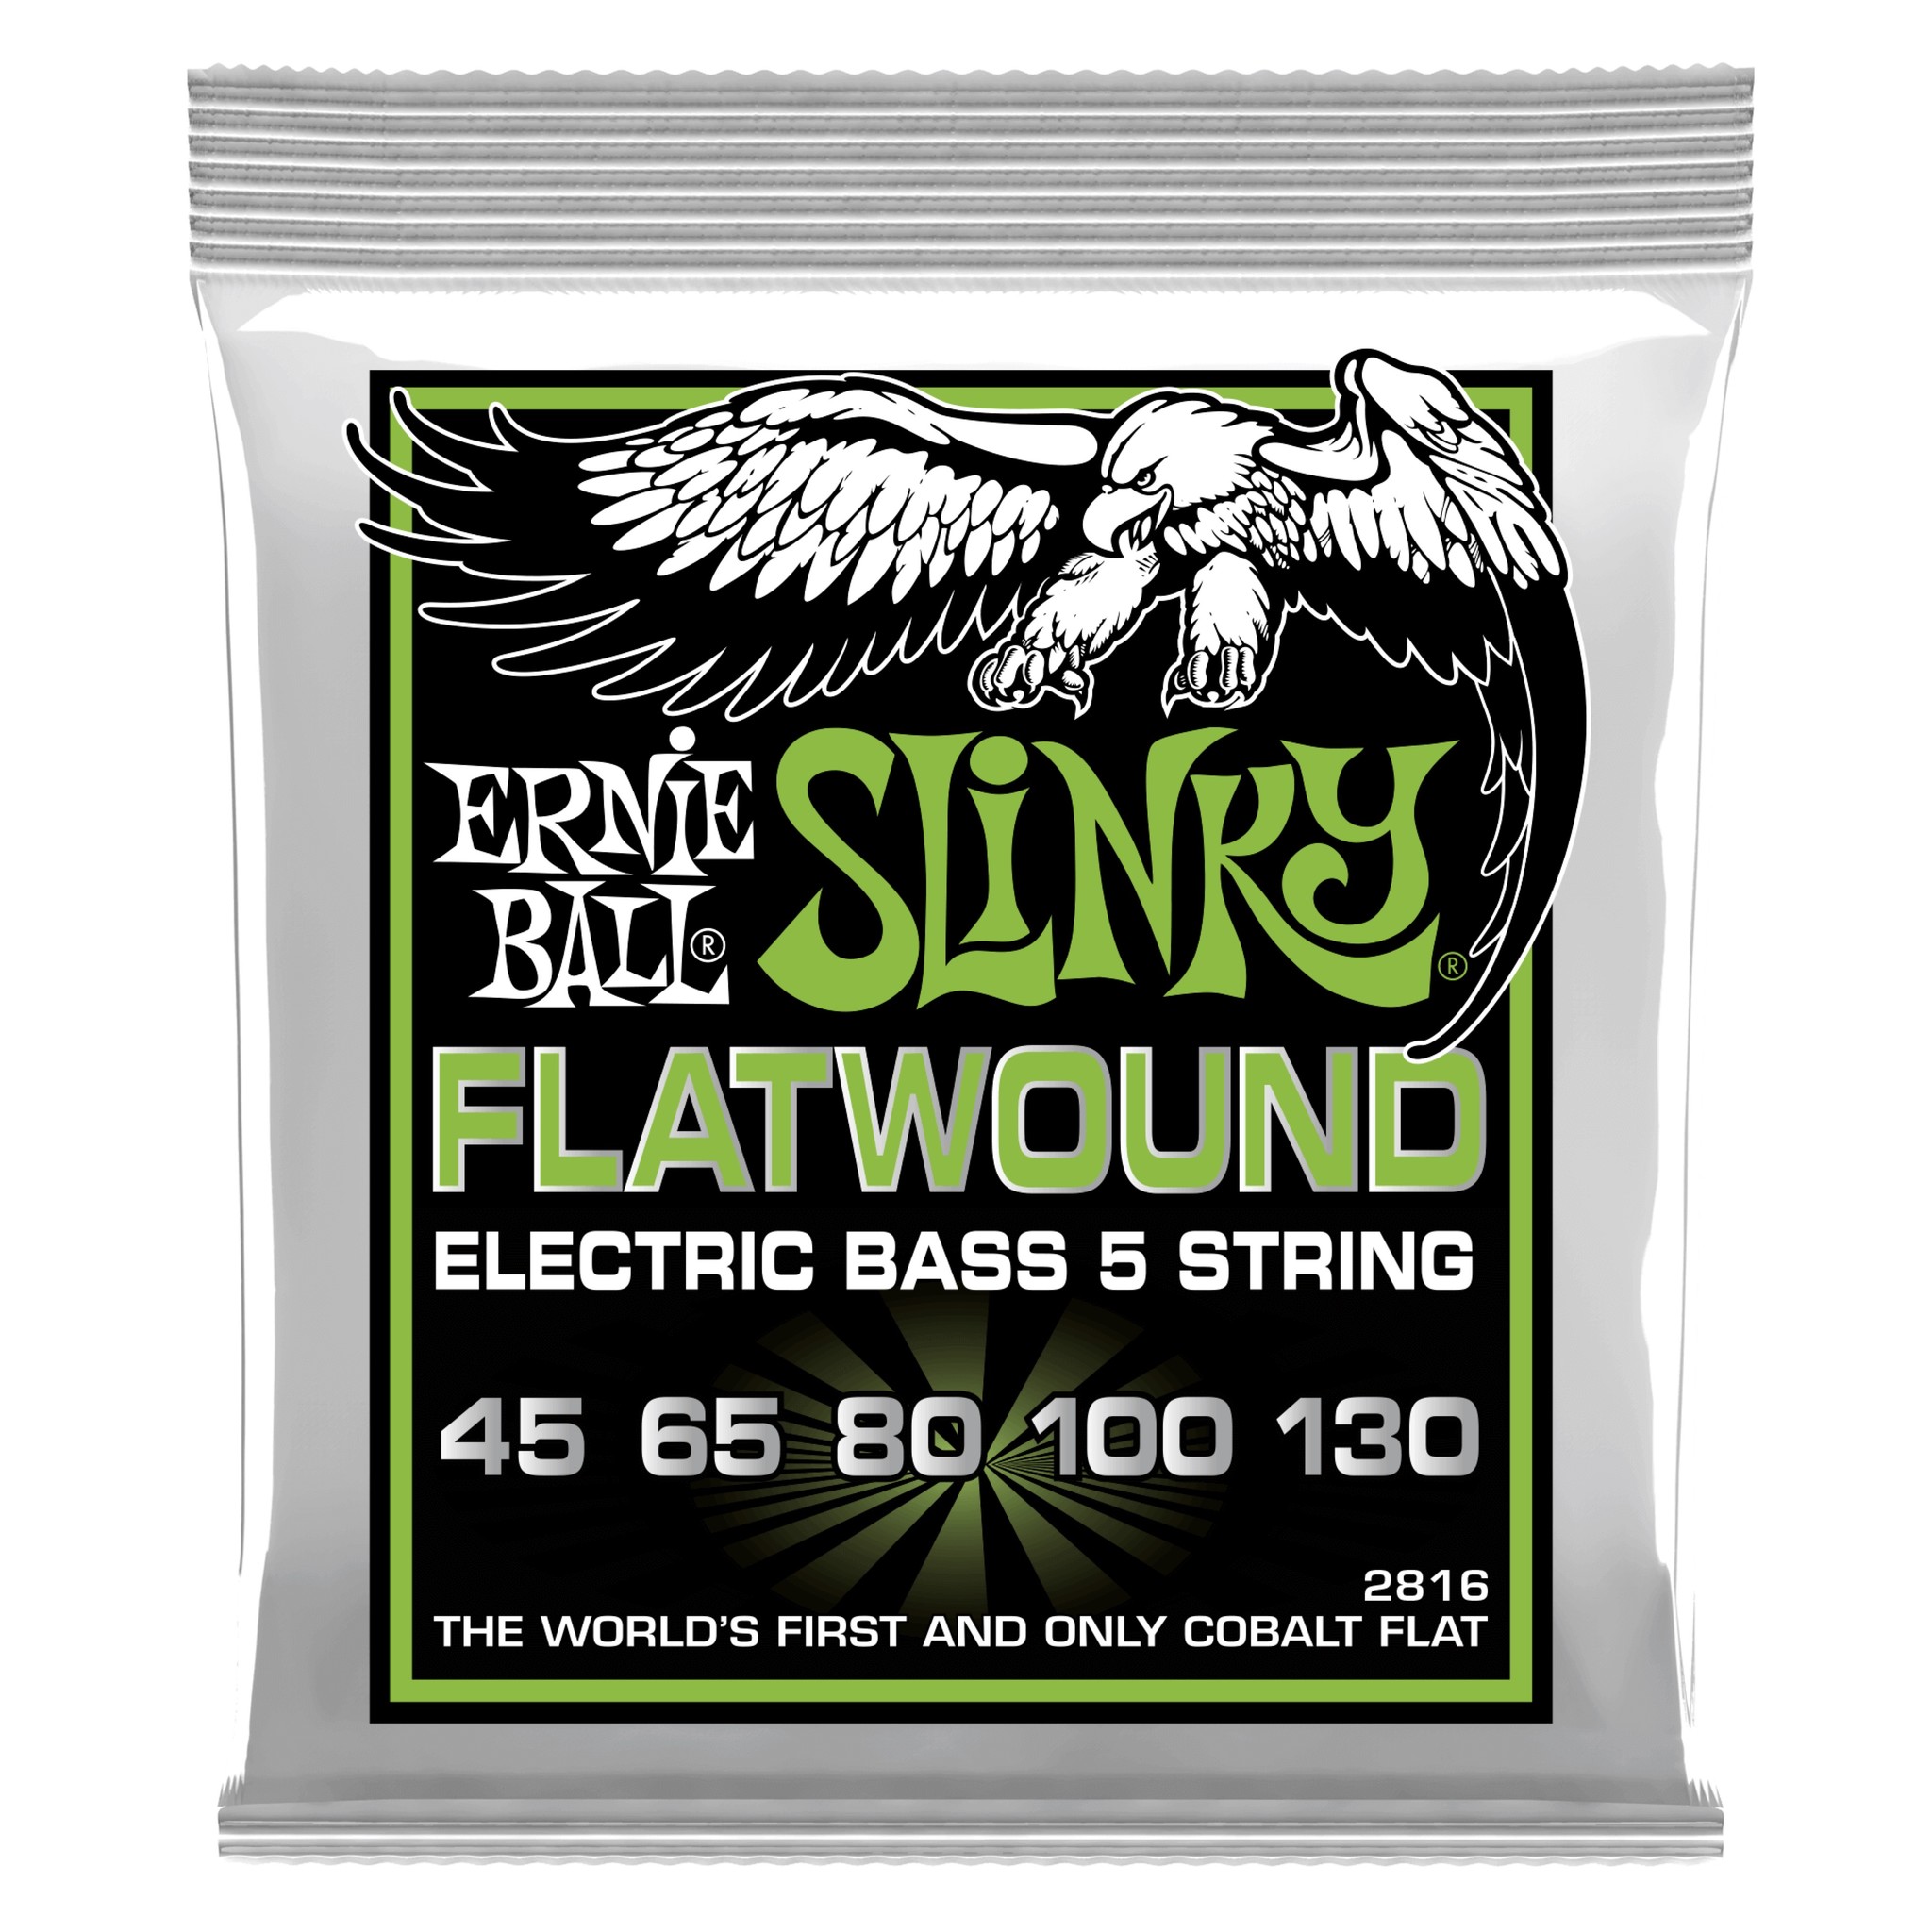 Ernie Ball Regular Slinky 5-String Flatwound Electric Bass Strings - 45-130 Gauge (P02816)